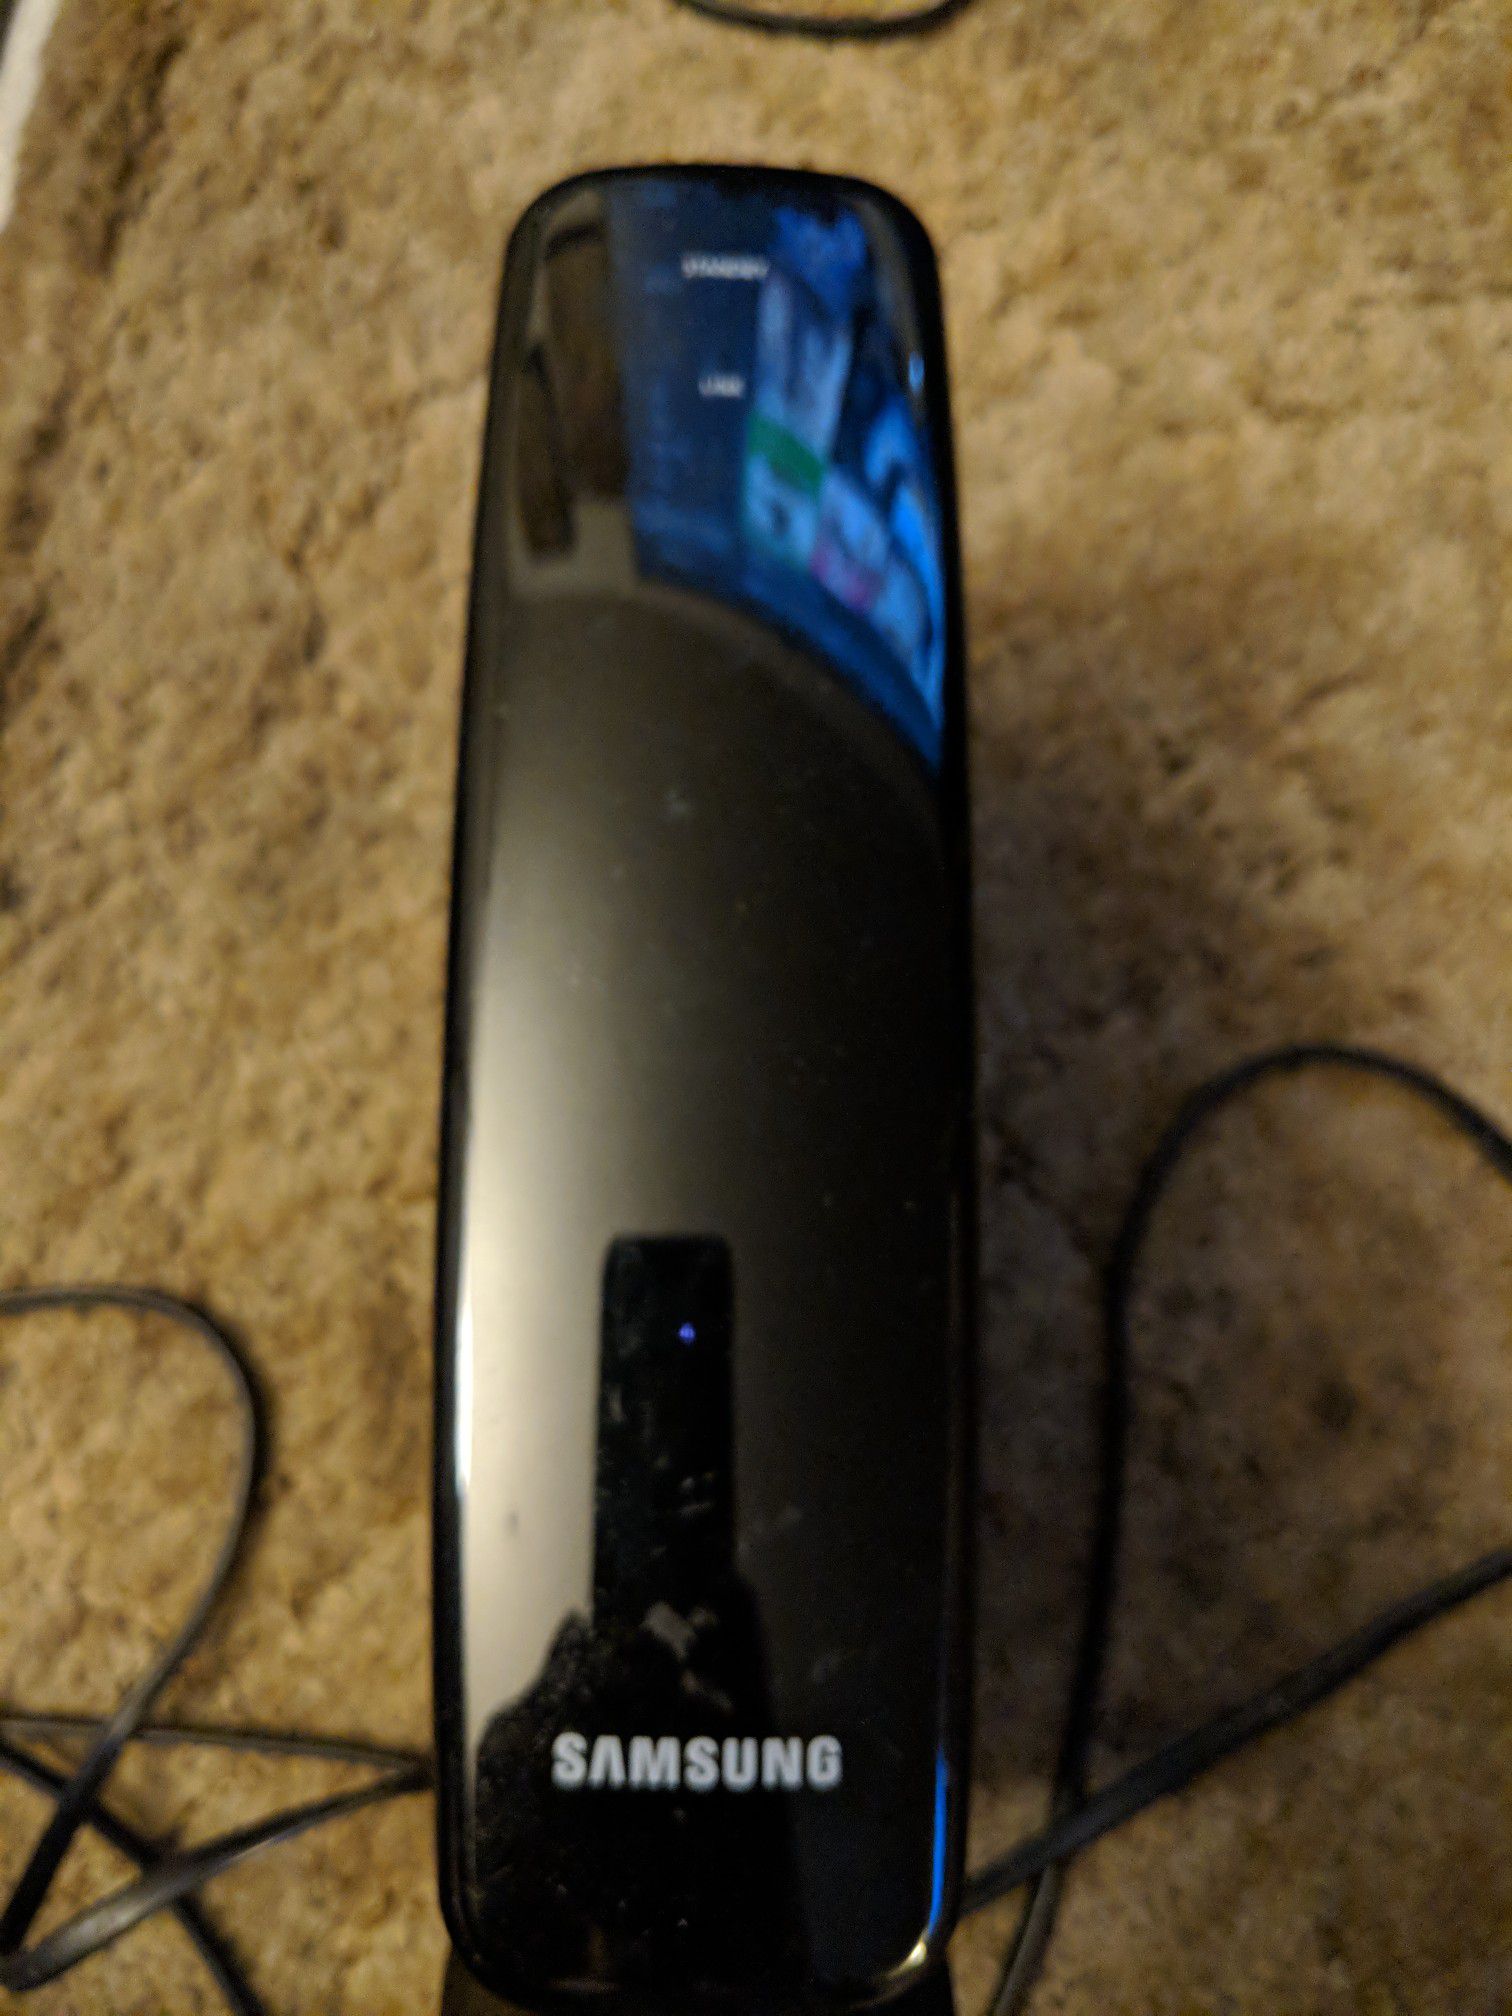 Samsung swa-4000